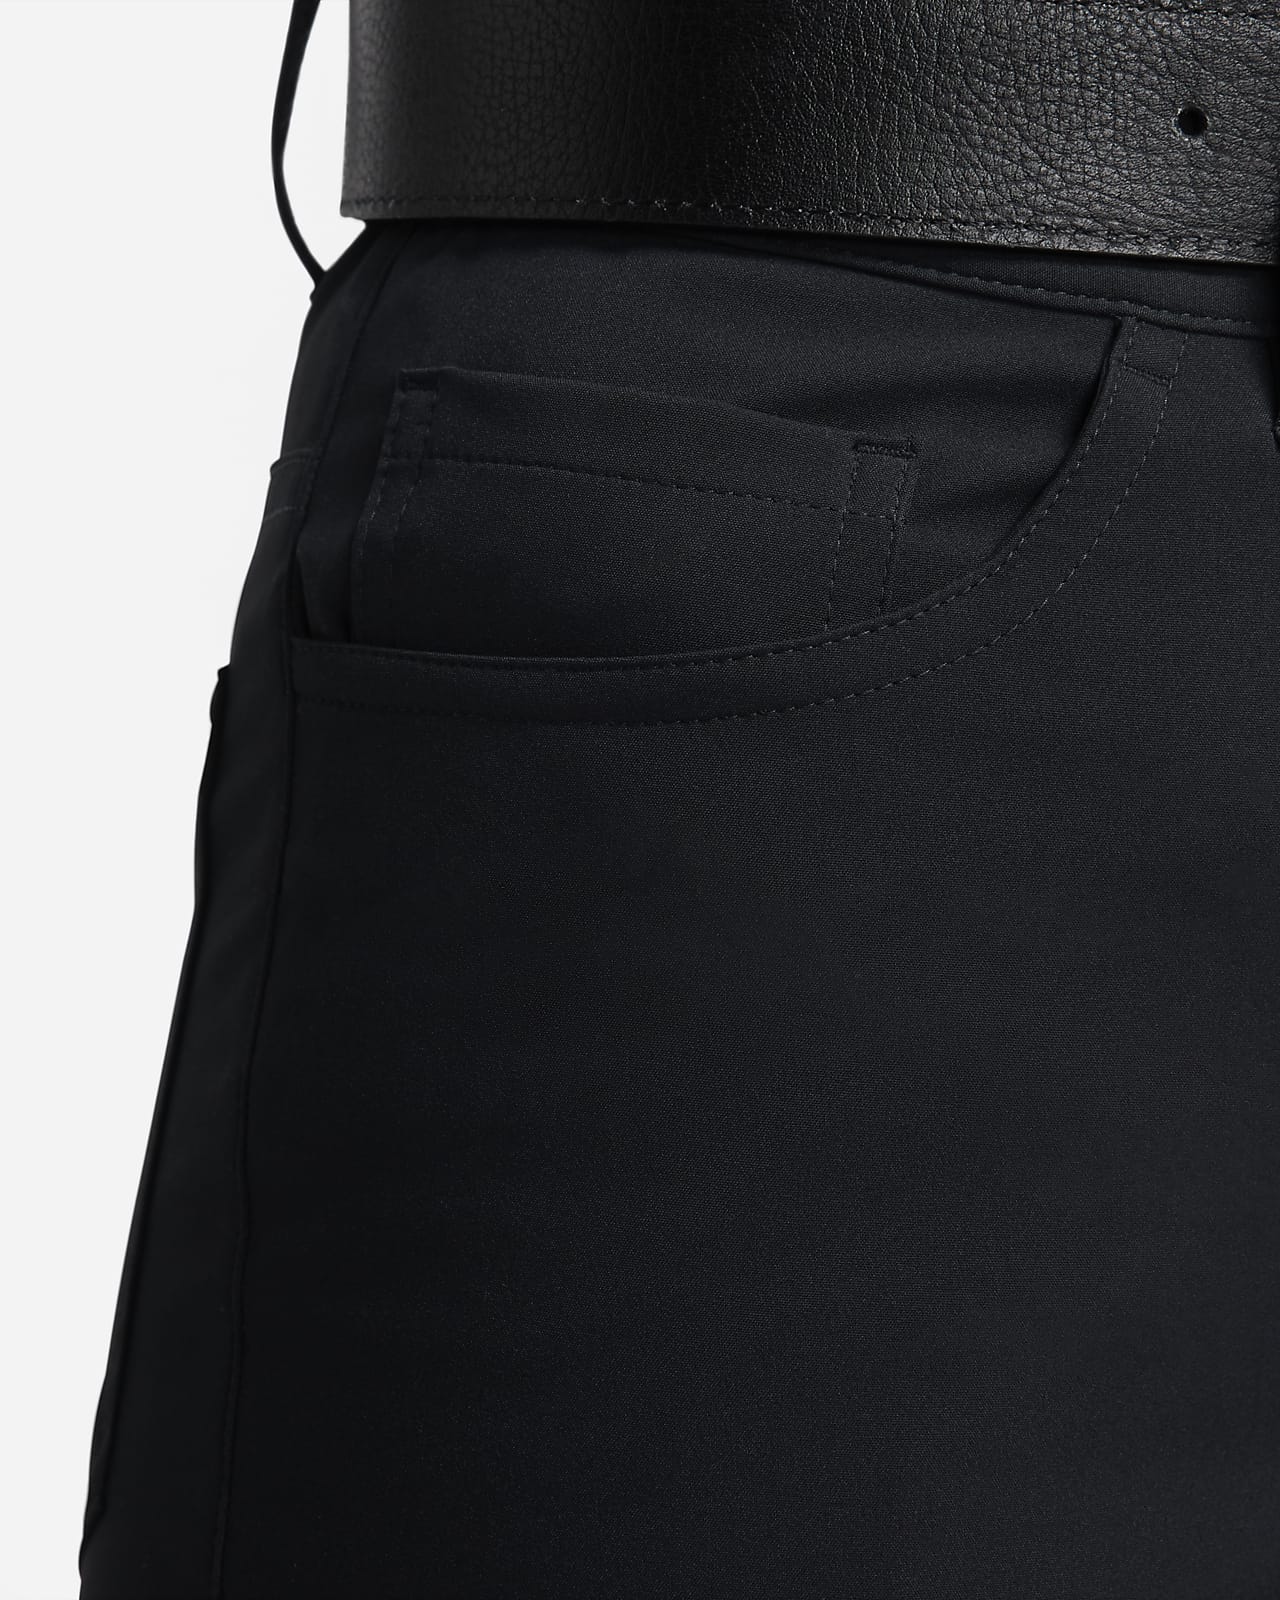 Nike Tour Repel Women's Slim-Fit Golf Trousers